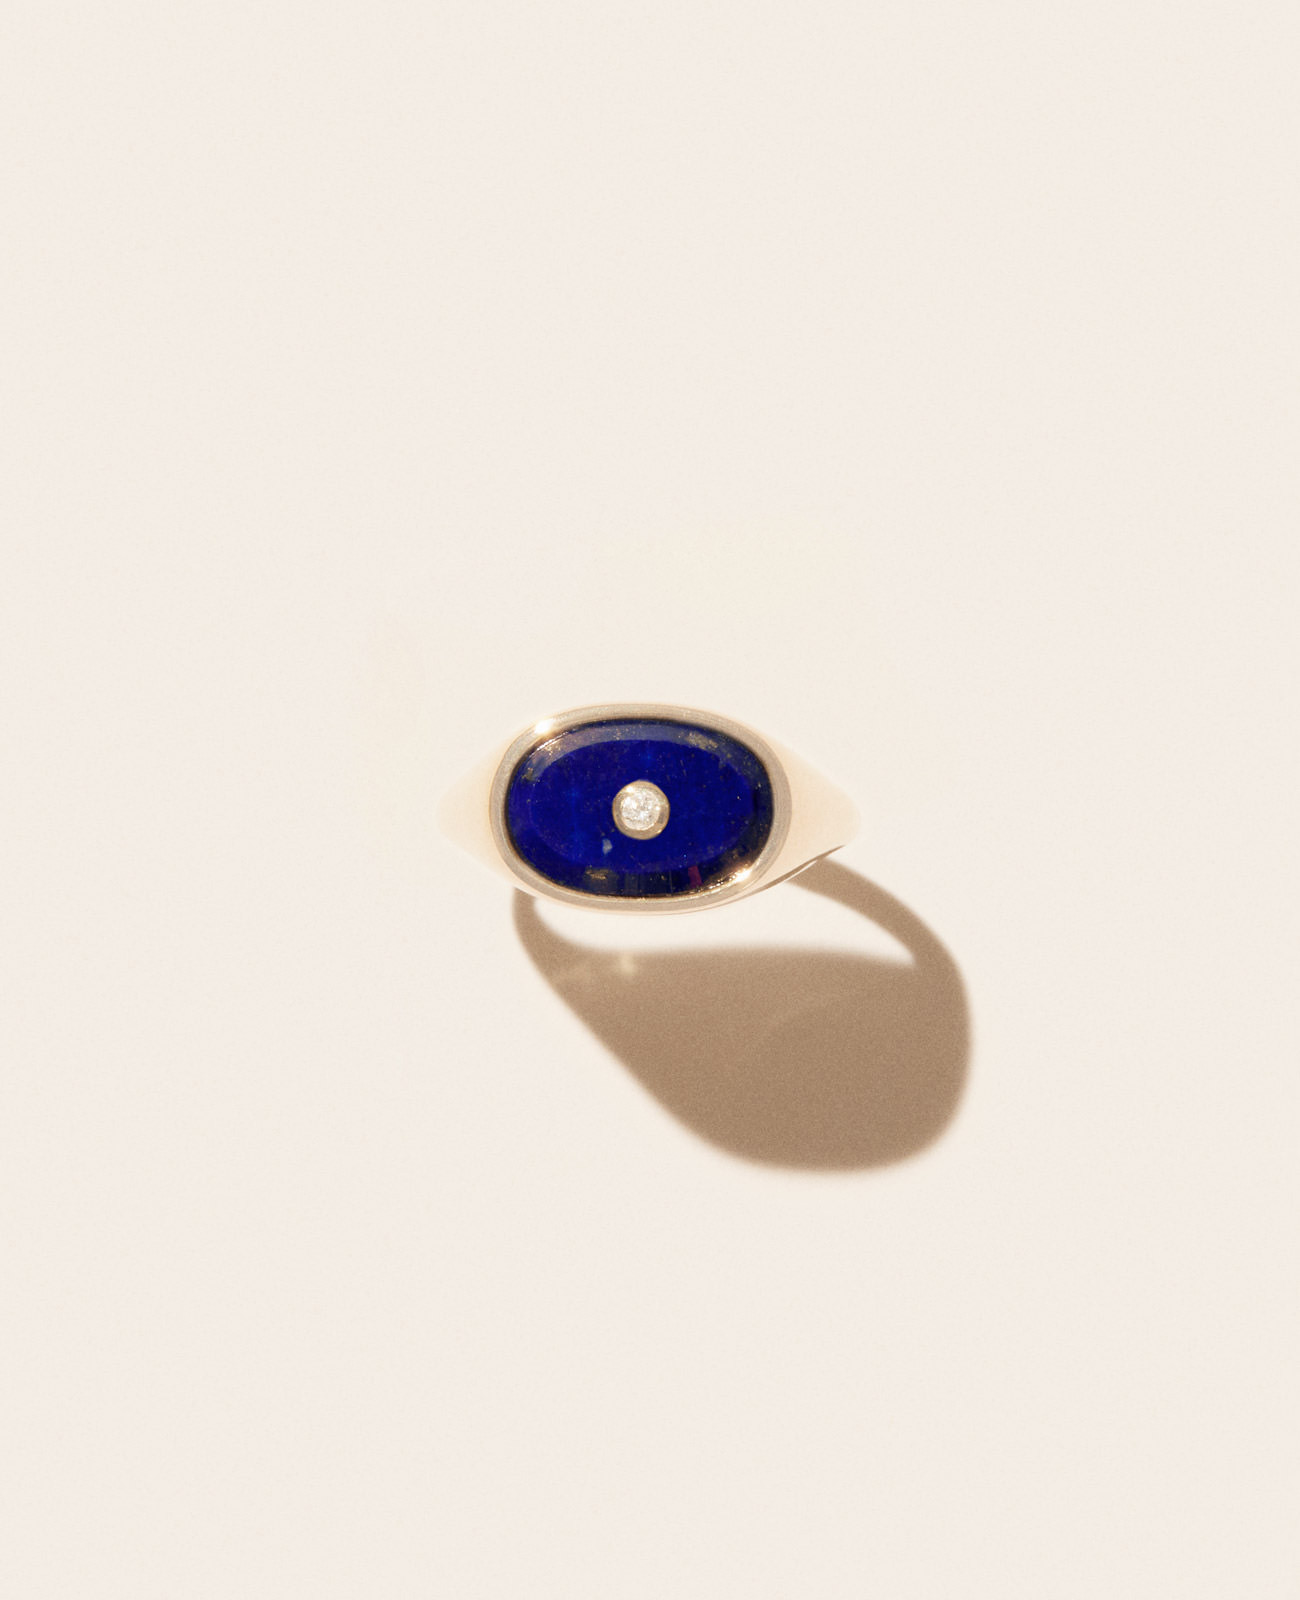 ORSO LAPIS-LAZULI ring pascale monvoisin jewelry paris